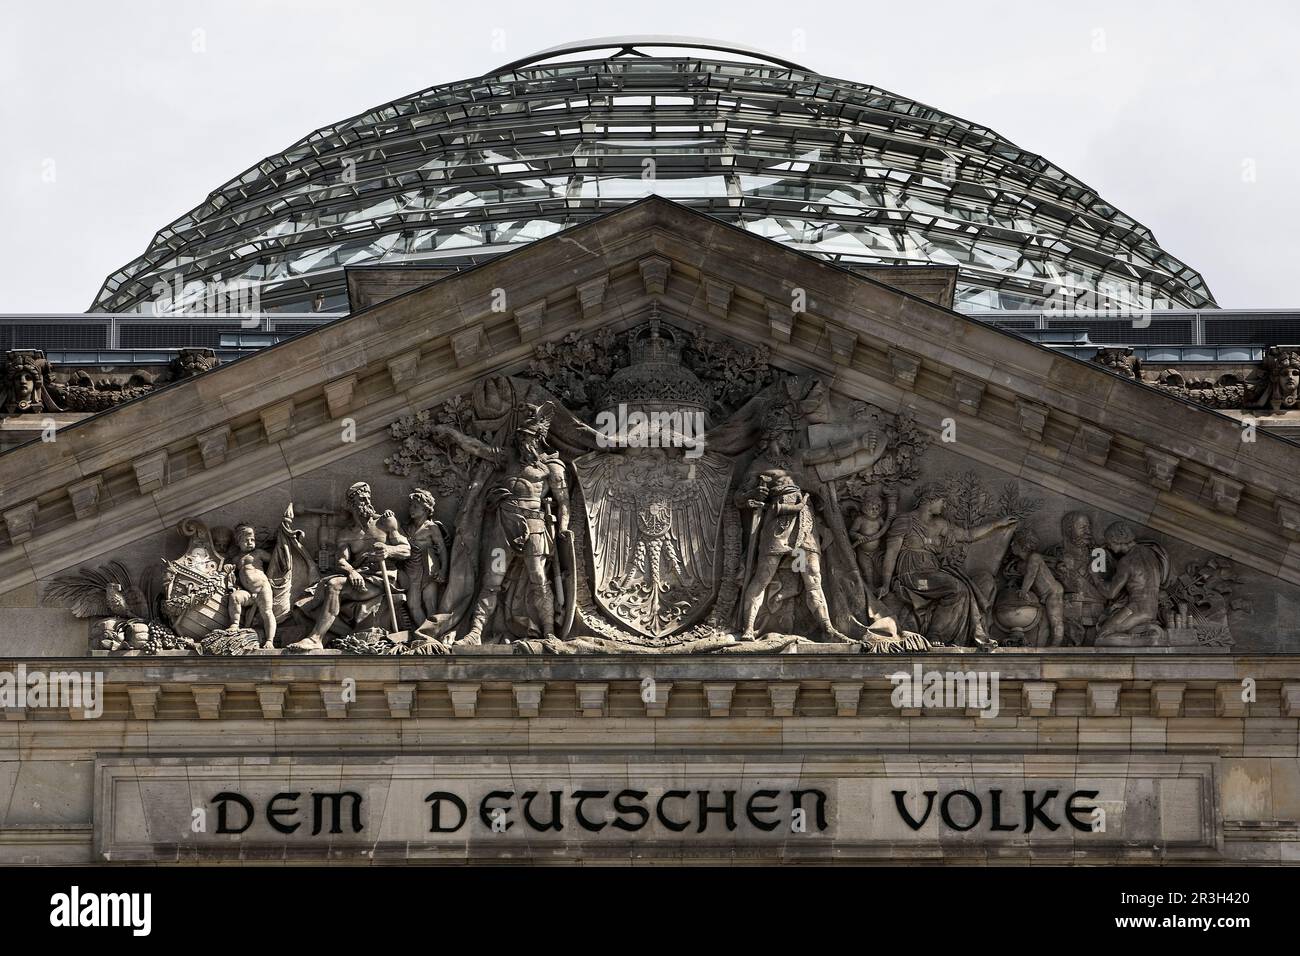 Reichstag, DEM deutsche Volke, détail, Bundestag allemand, district du gouvernement, Berlin, Allemagne Banque D'Images